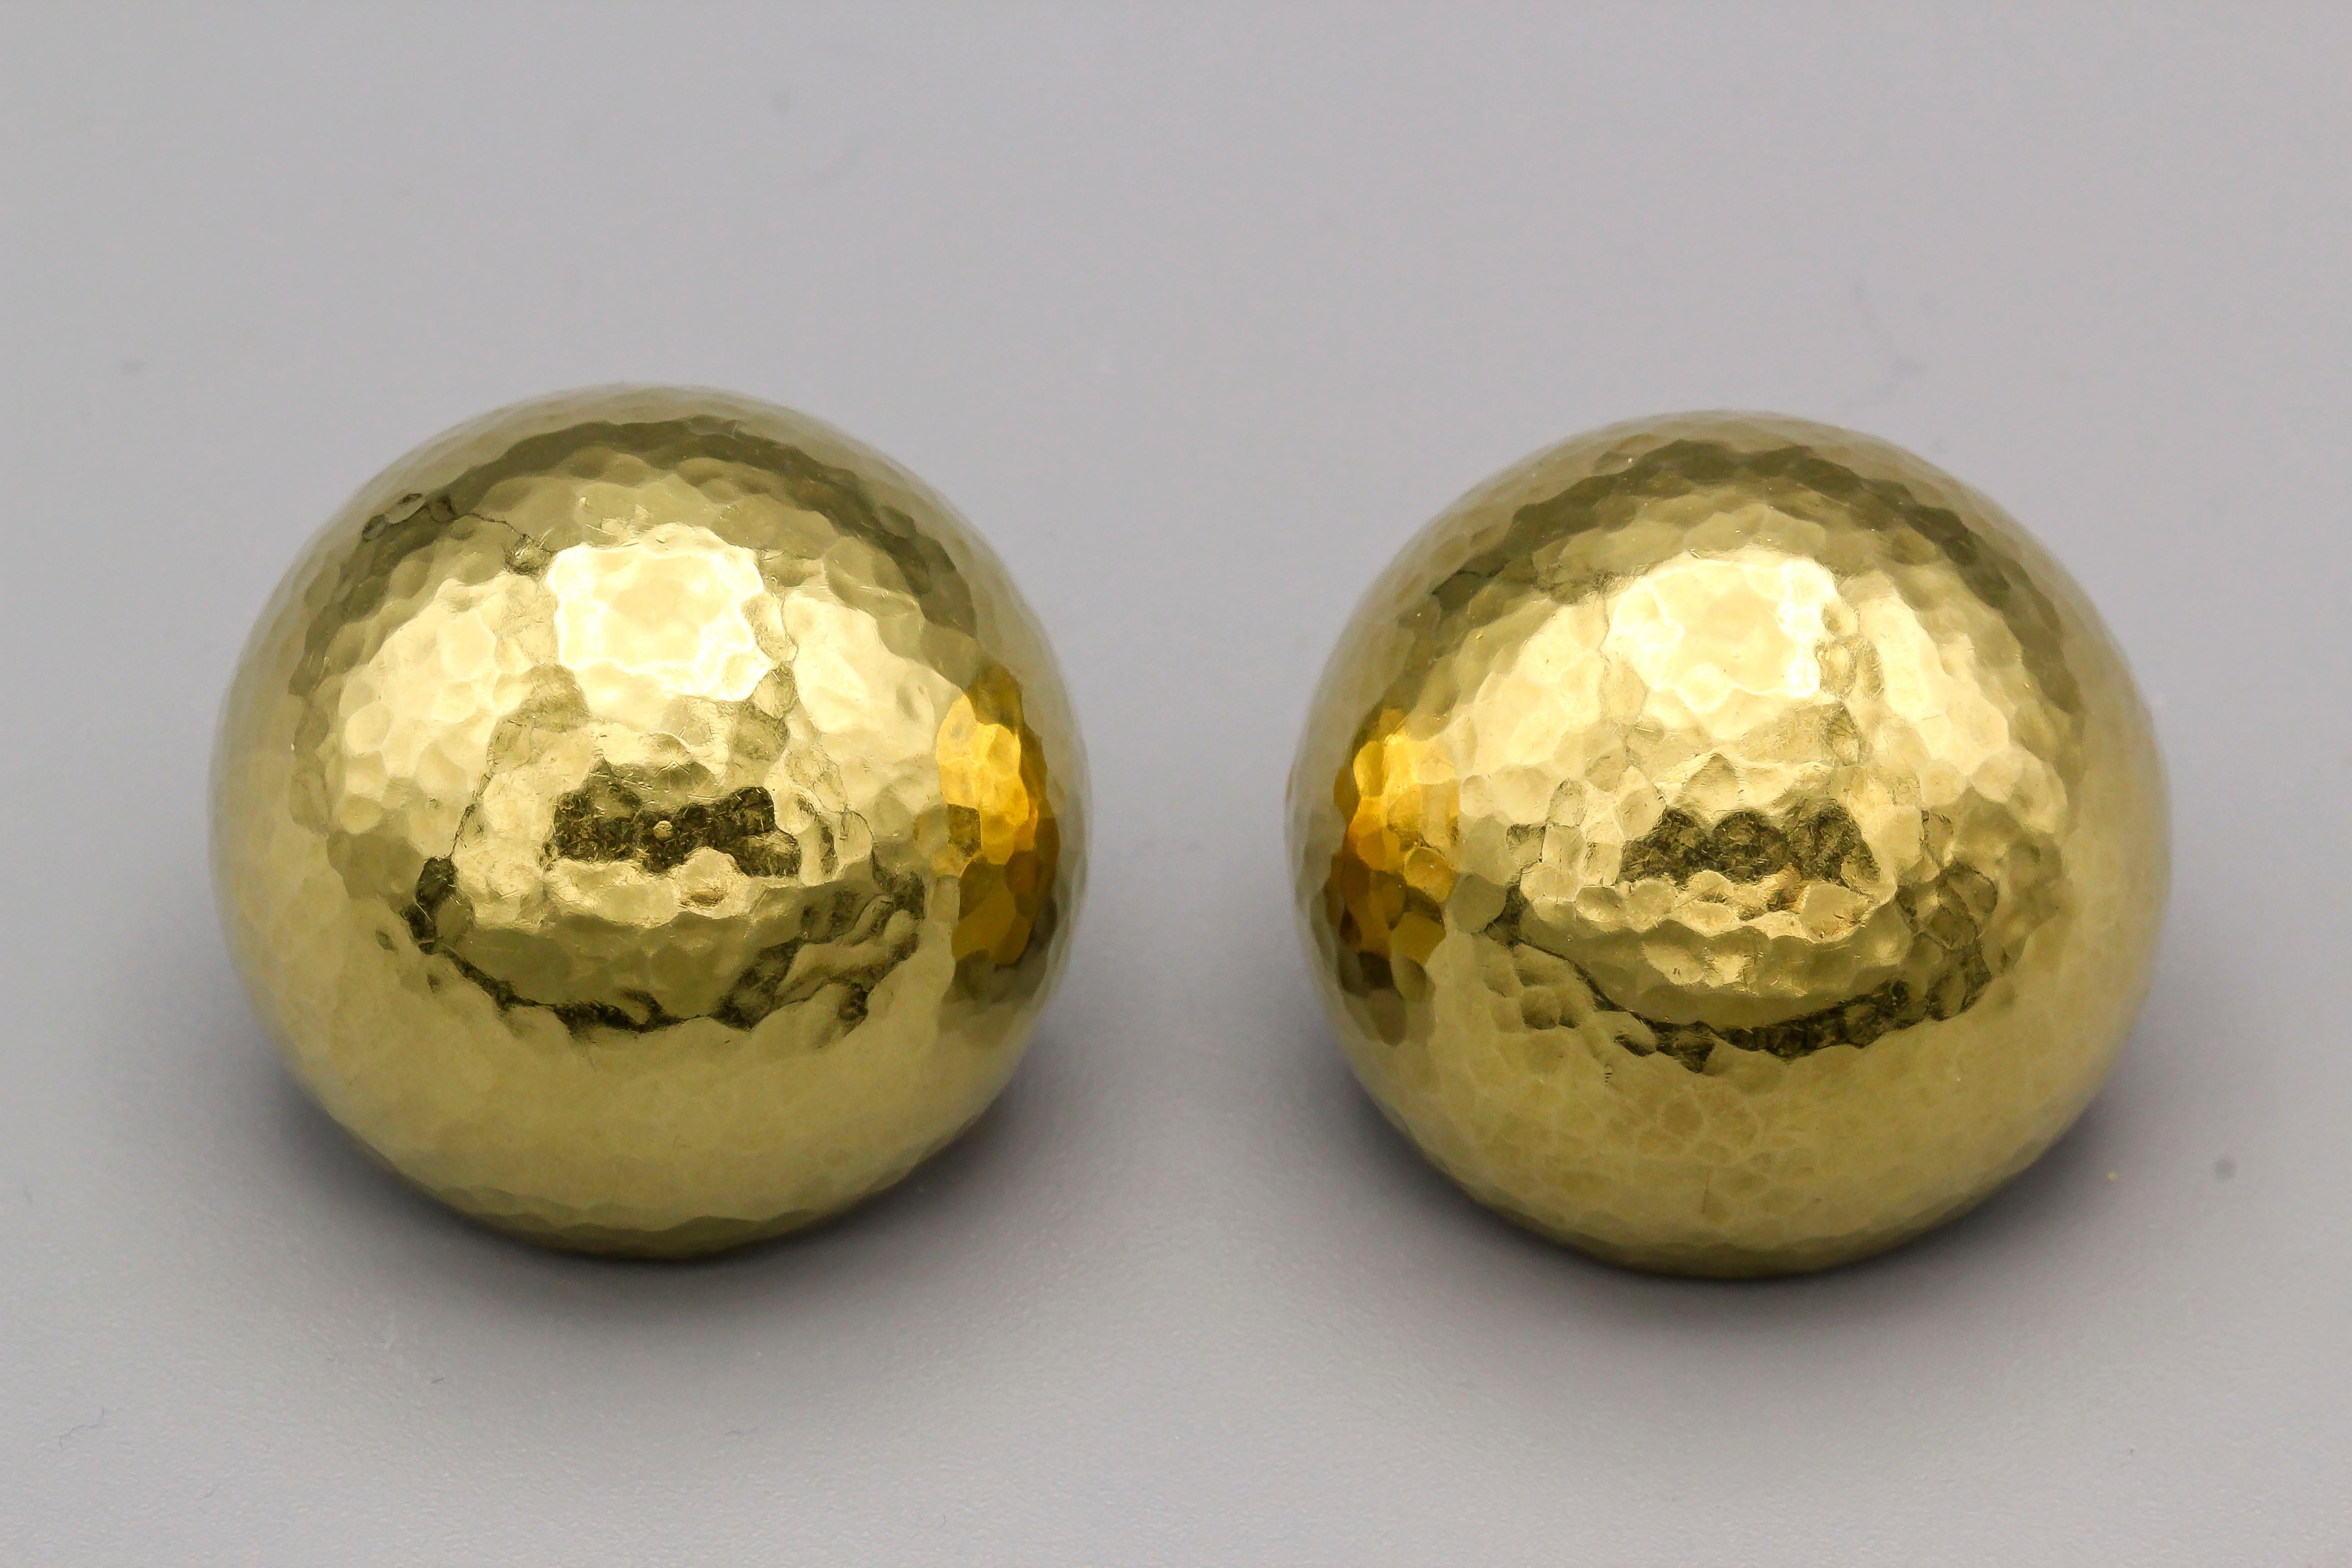 Fine 18K gold earrings from the 